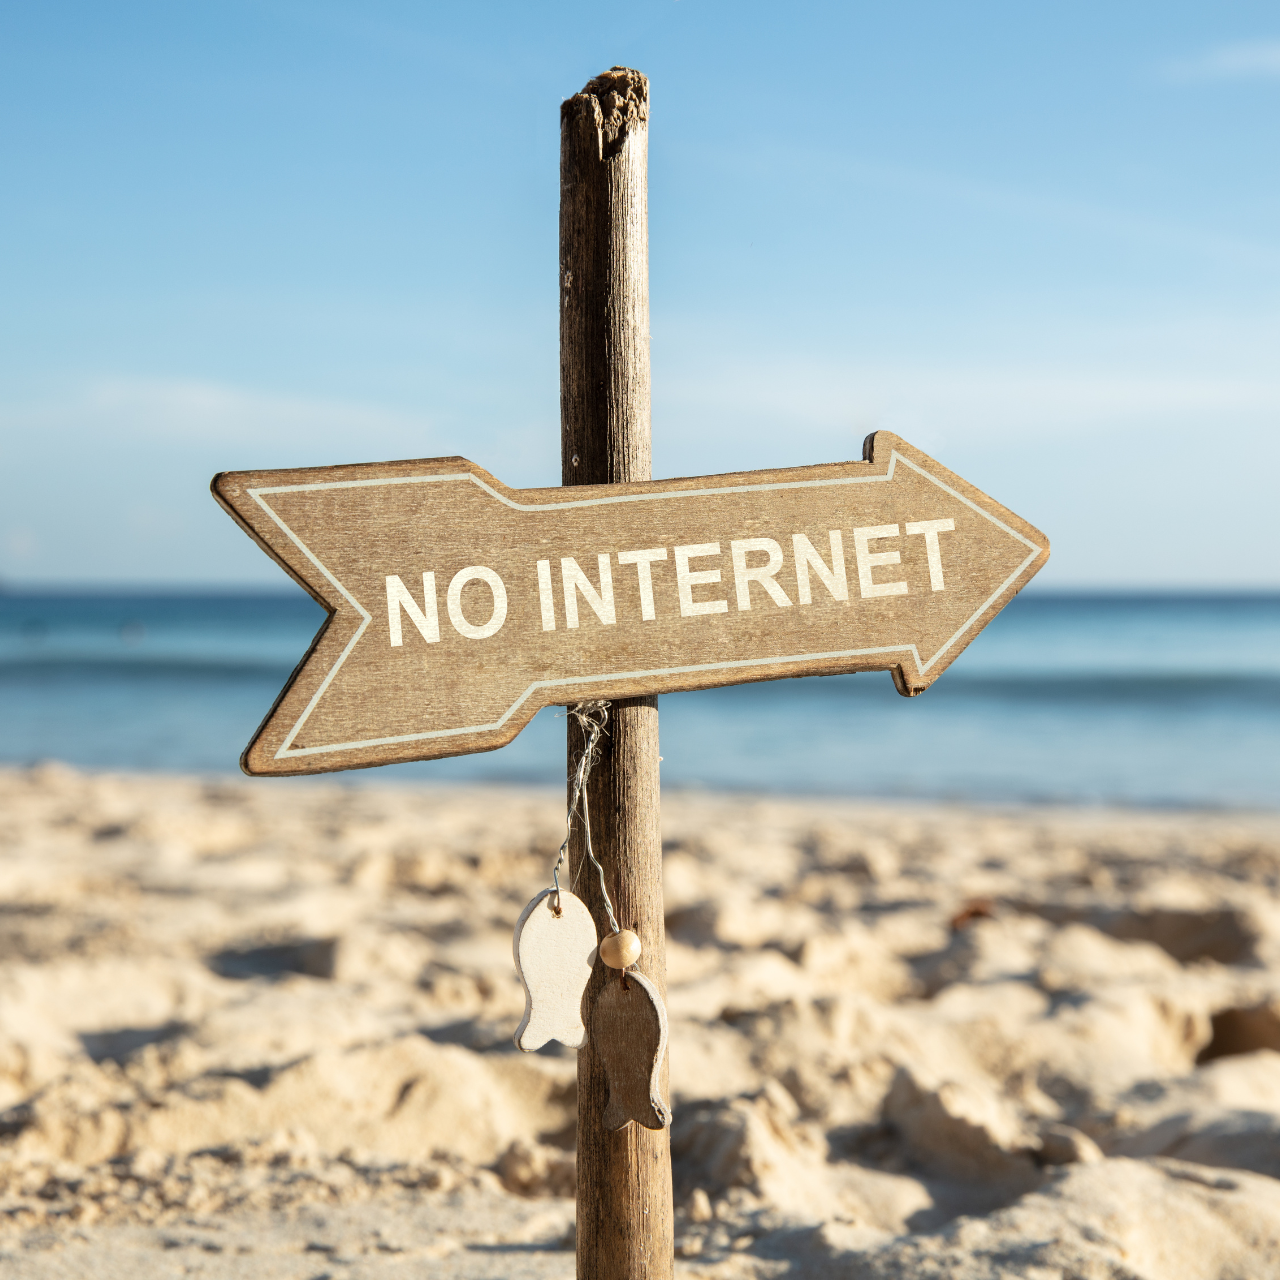 No Internet Wooden Directional Arrow Sign On Beach